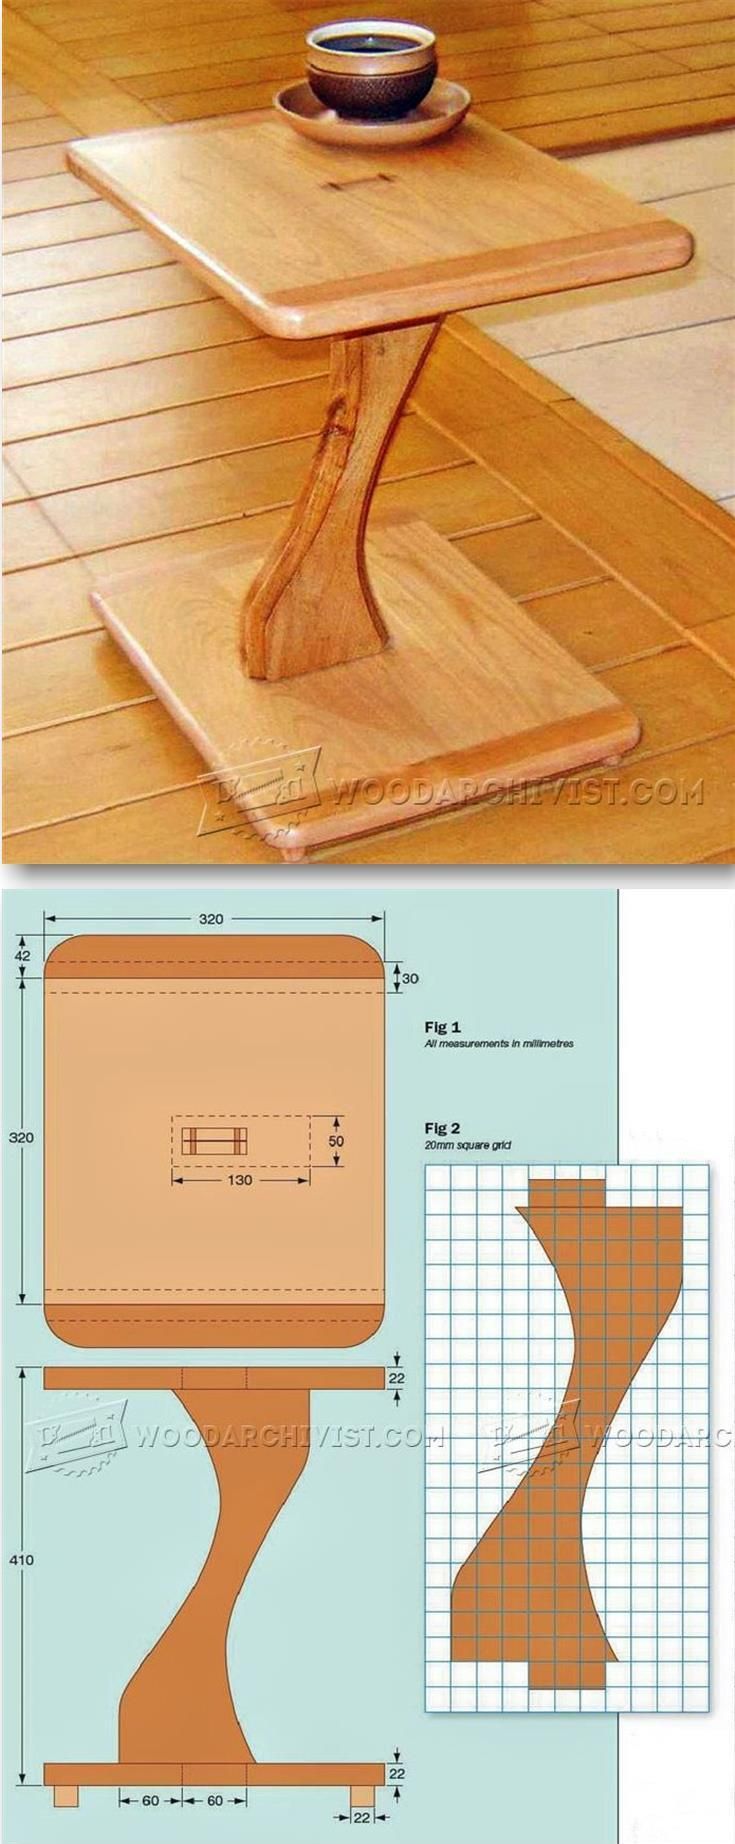 Pedestal Table Plans – Furniture Plans and Projects | WoodArchivist.com